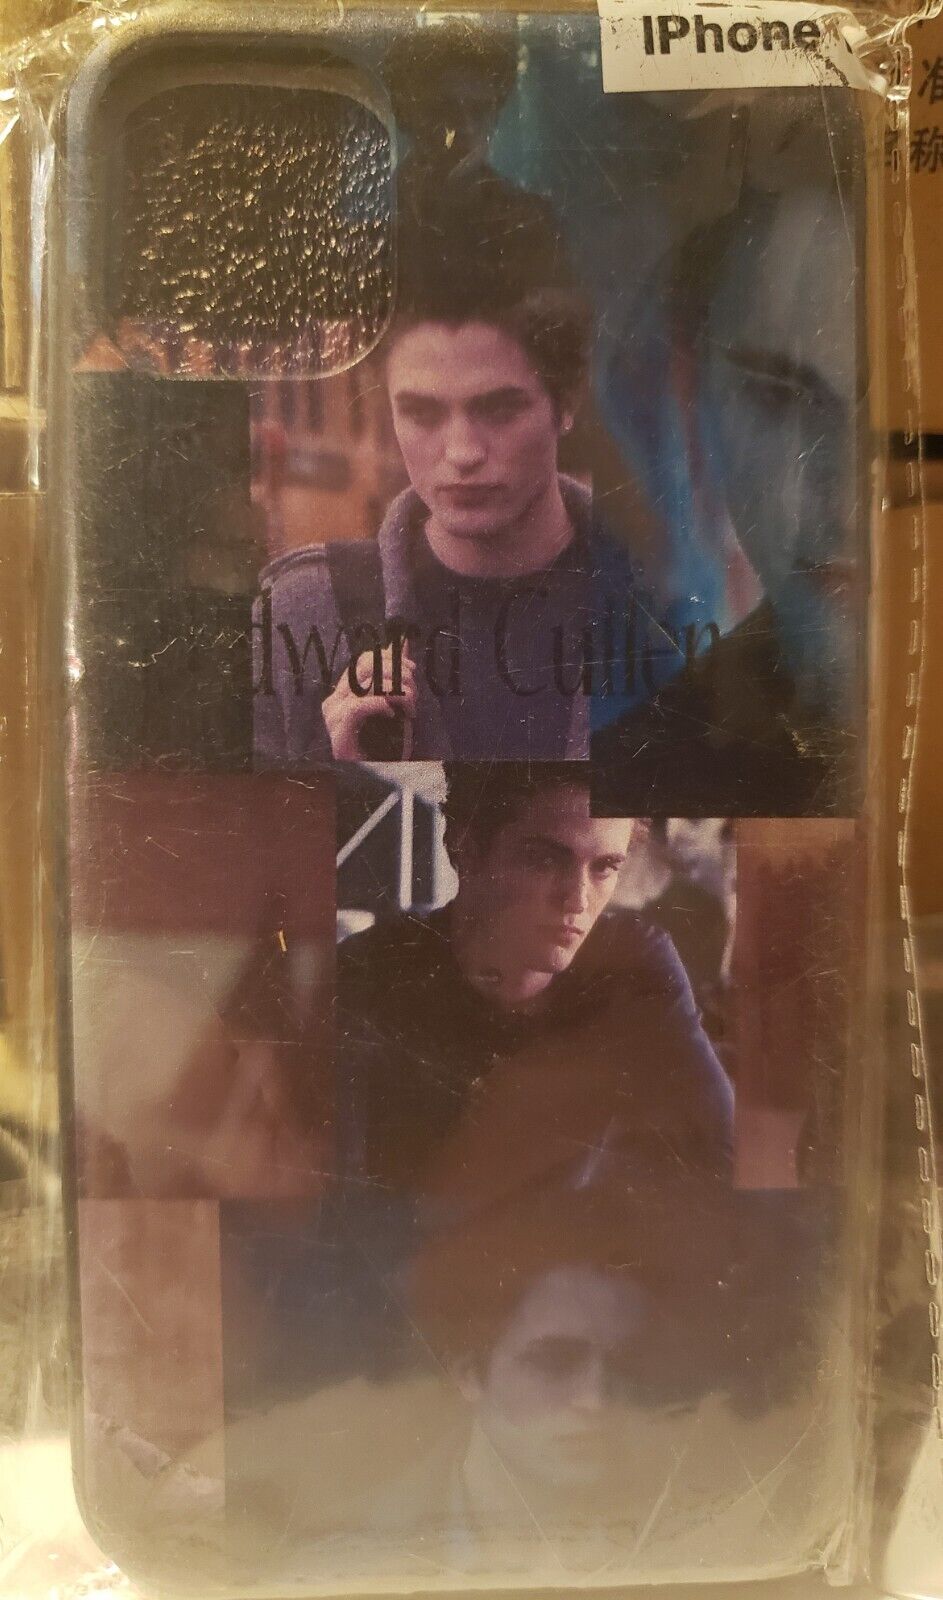 Edward Cullen Case Iphone Xr, Cover Iphone 11 Twilight